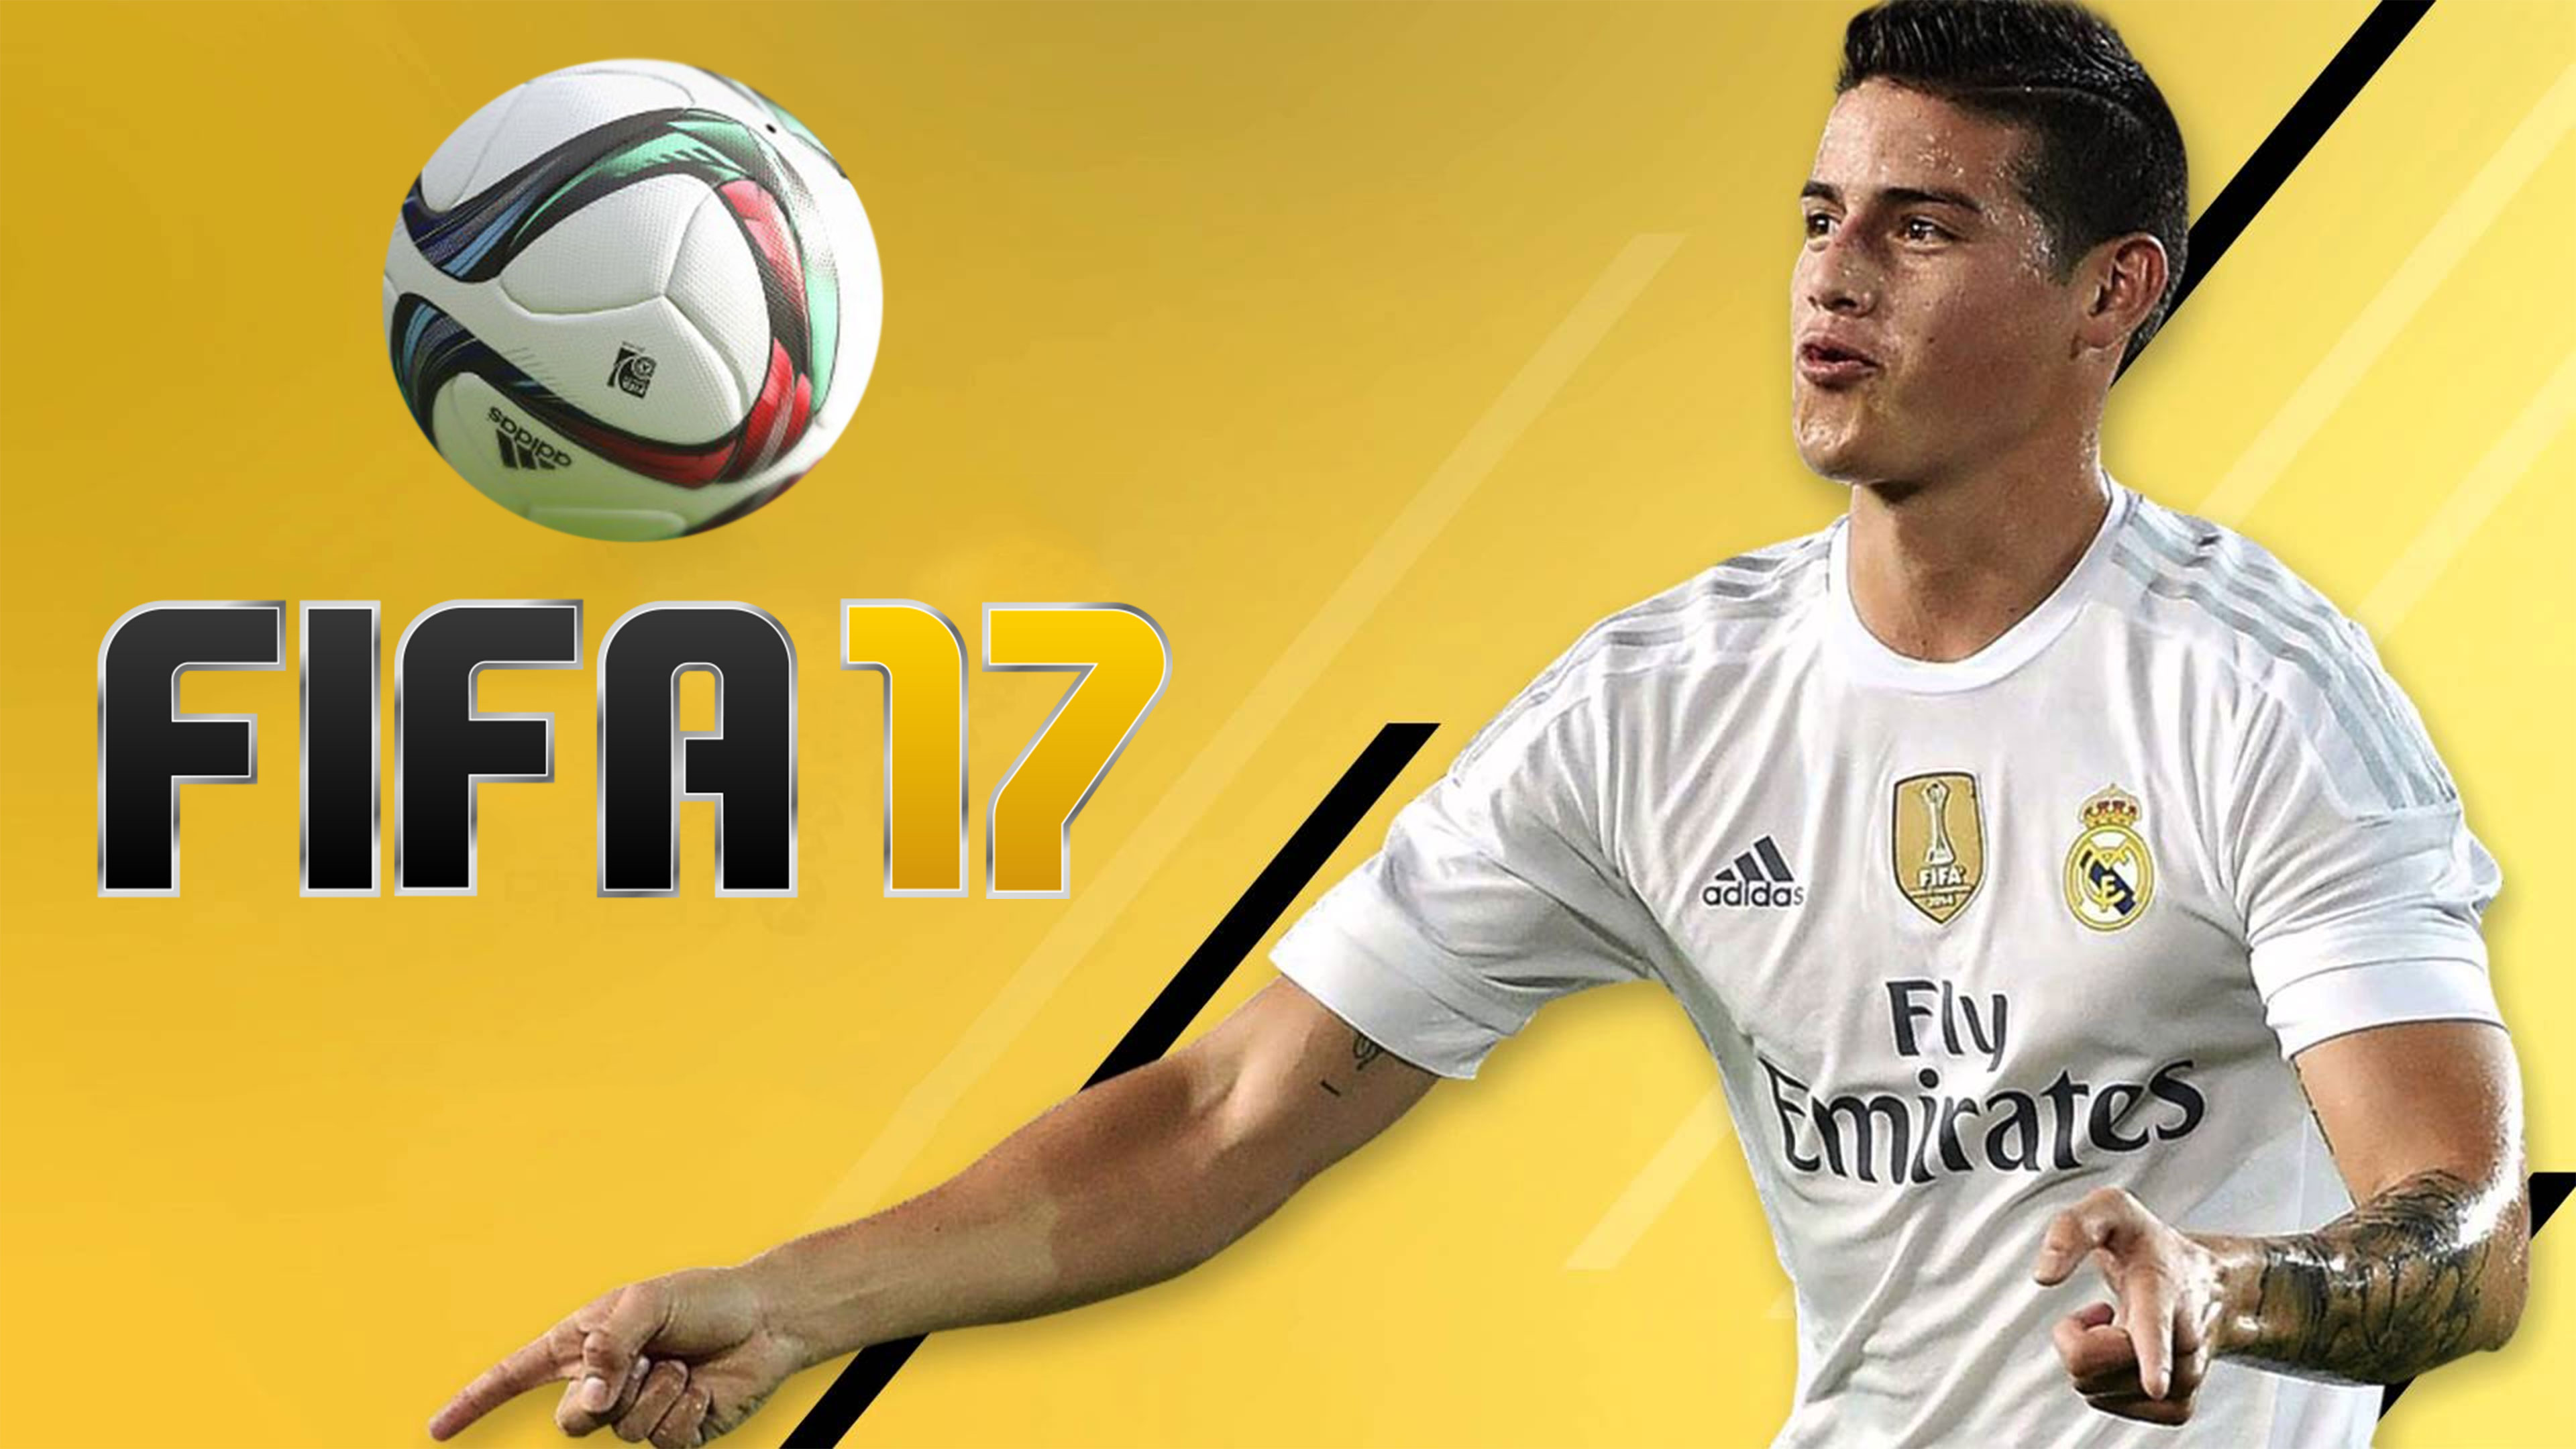 FIFA 17 Wallpapers in Ultra HD | 4K